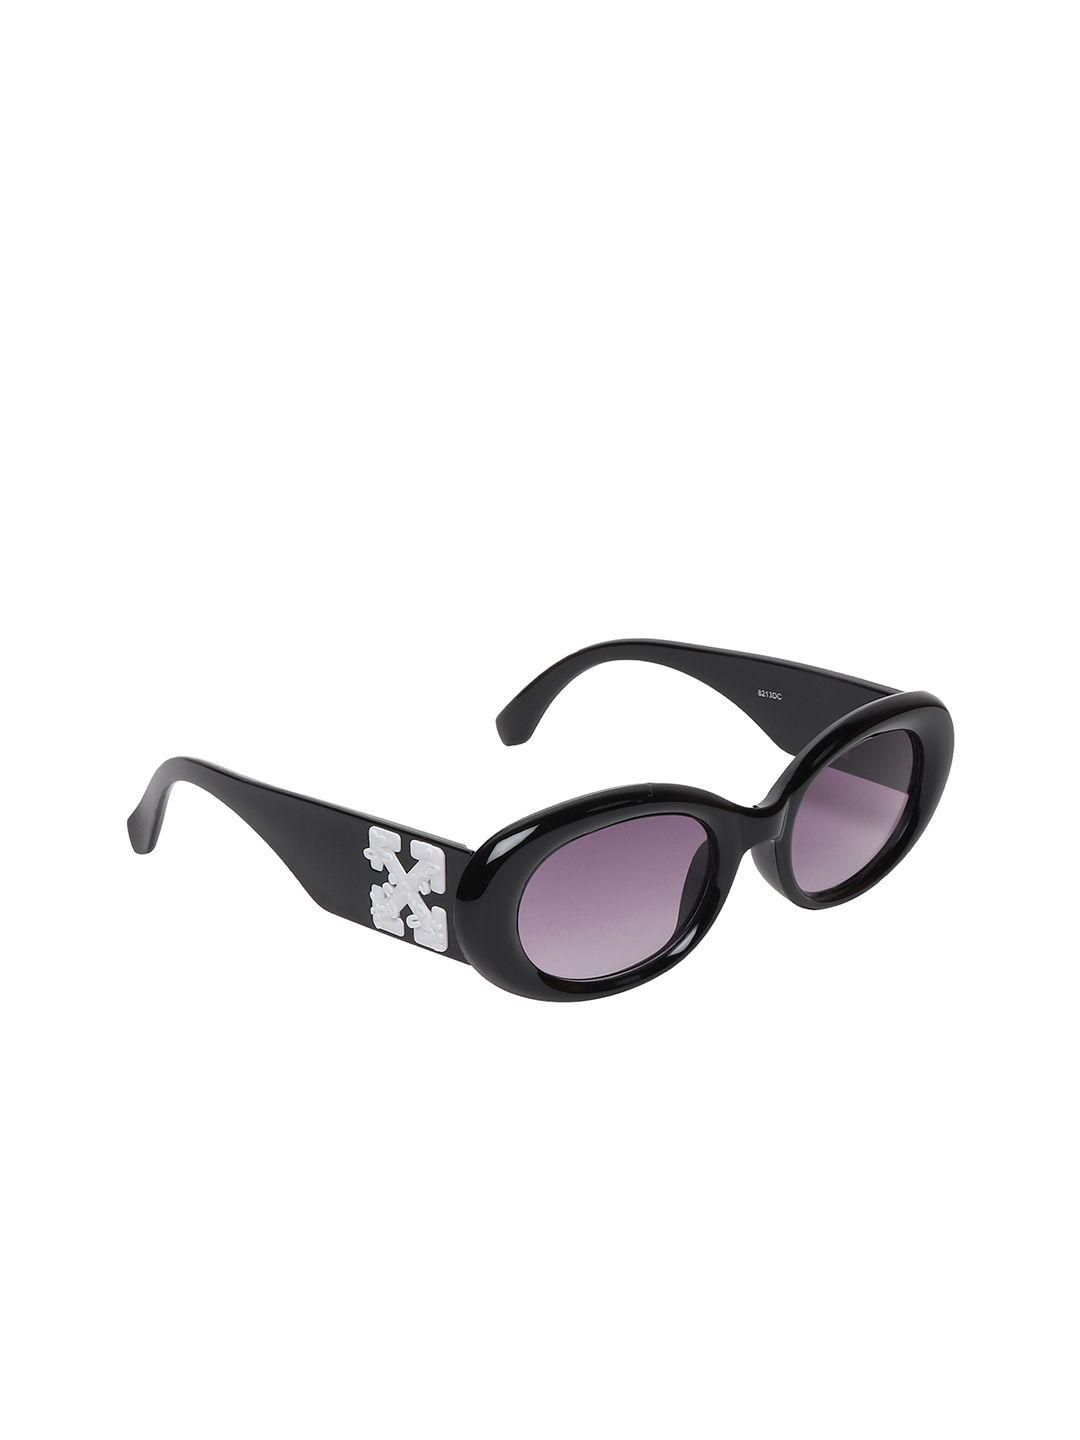 swiss-design-unisex-purple-lens-&-black-oval-sunglasses-with-uv-protected-lens